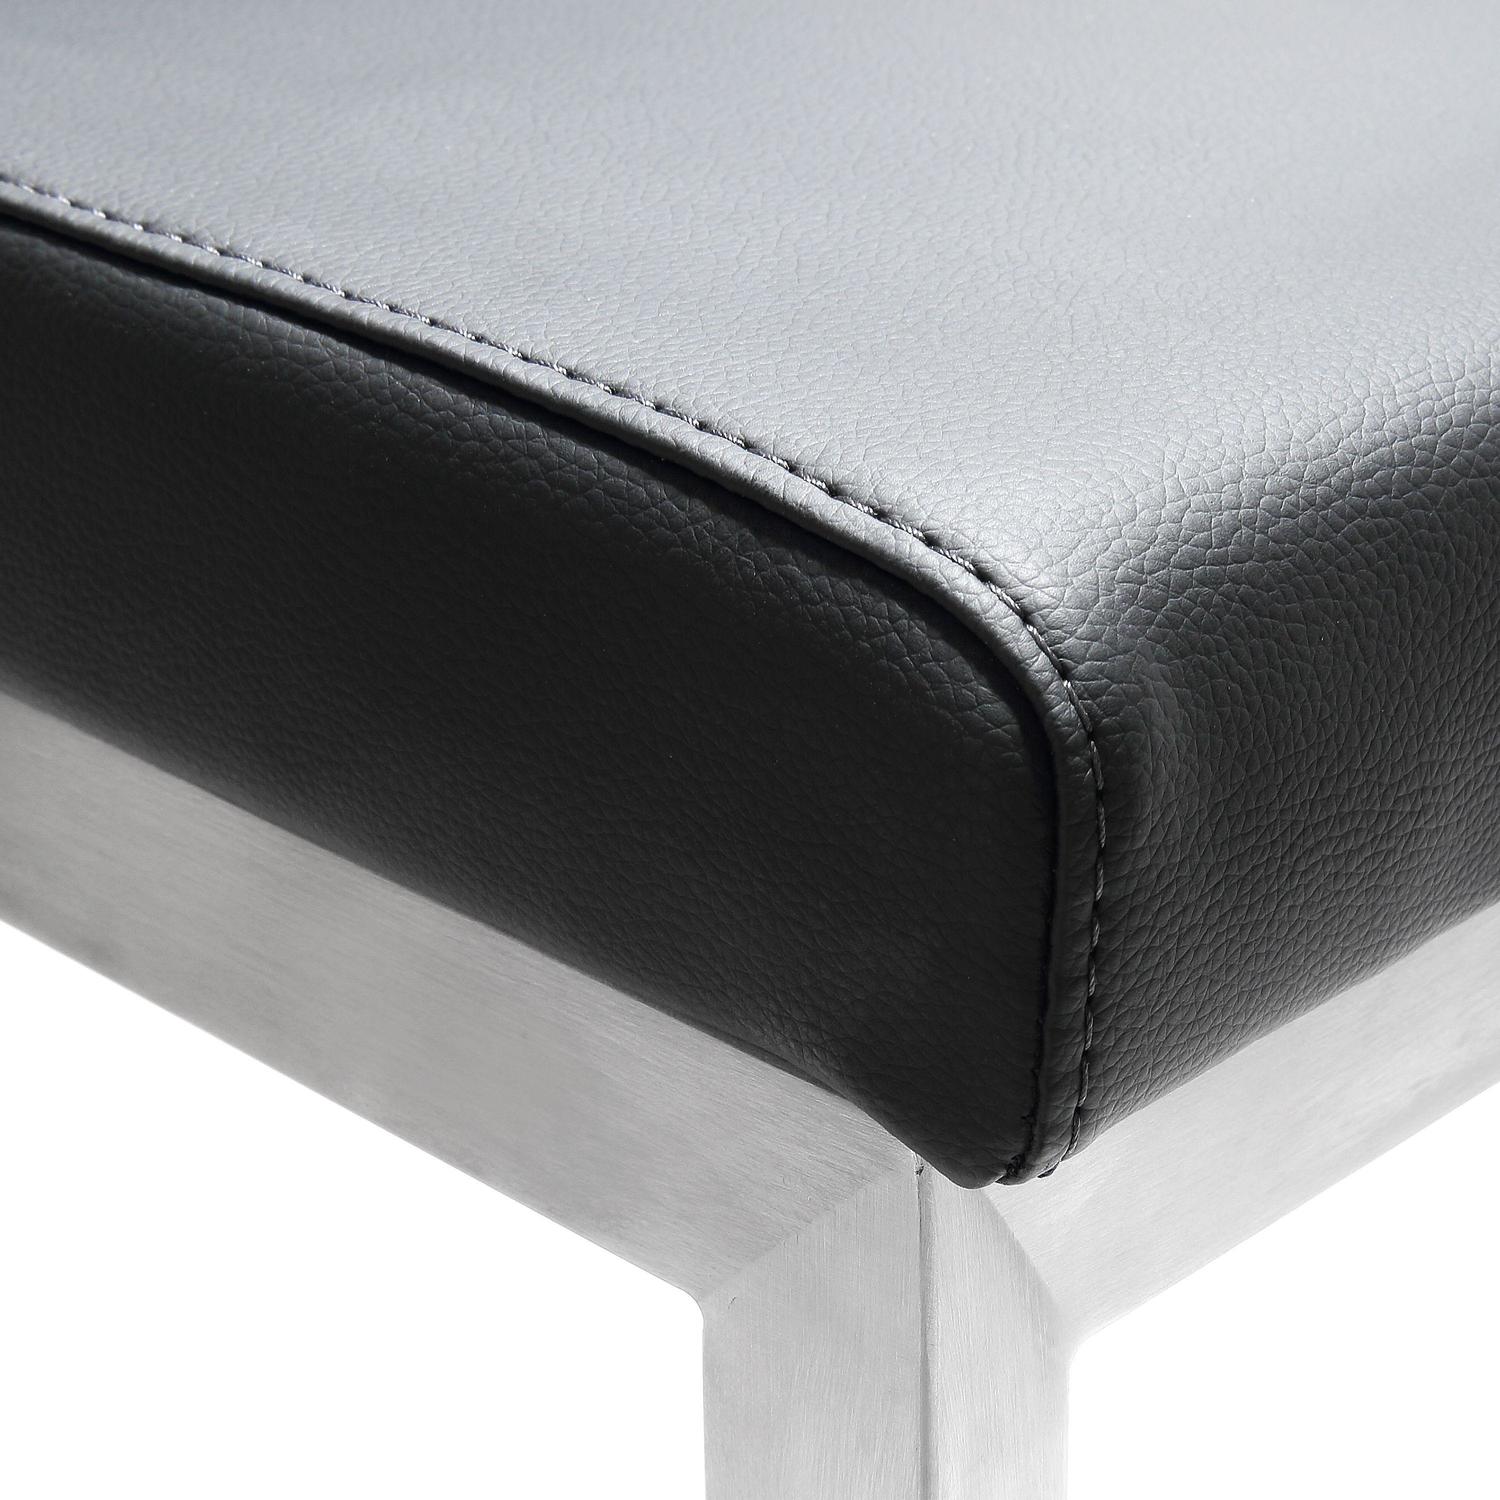 bar stools that swivel with backs Tov Furniture Stools Black